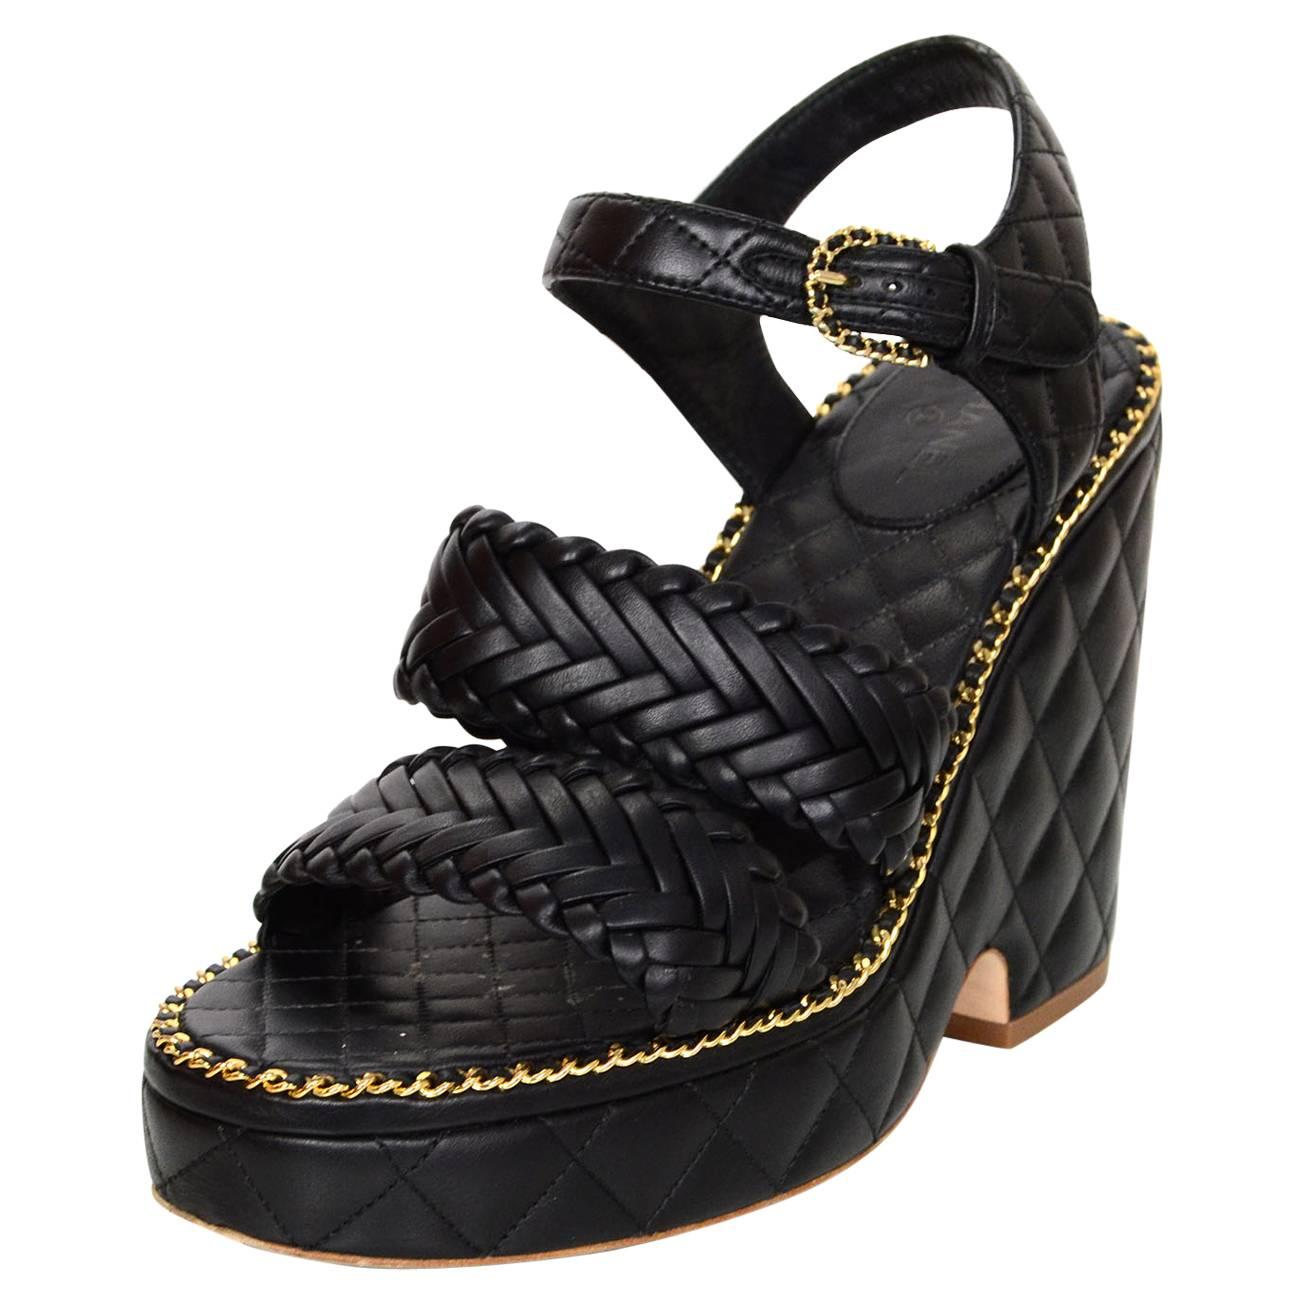 Chanel Black Quilted Platform Sandals Sz 38.5 rt. $1, 550